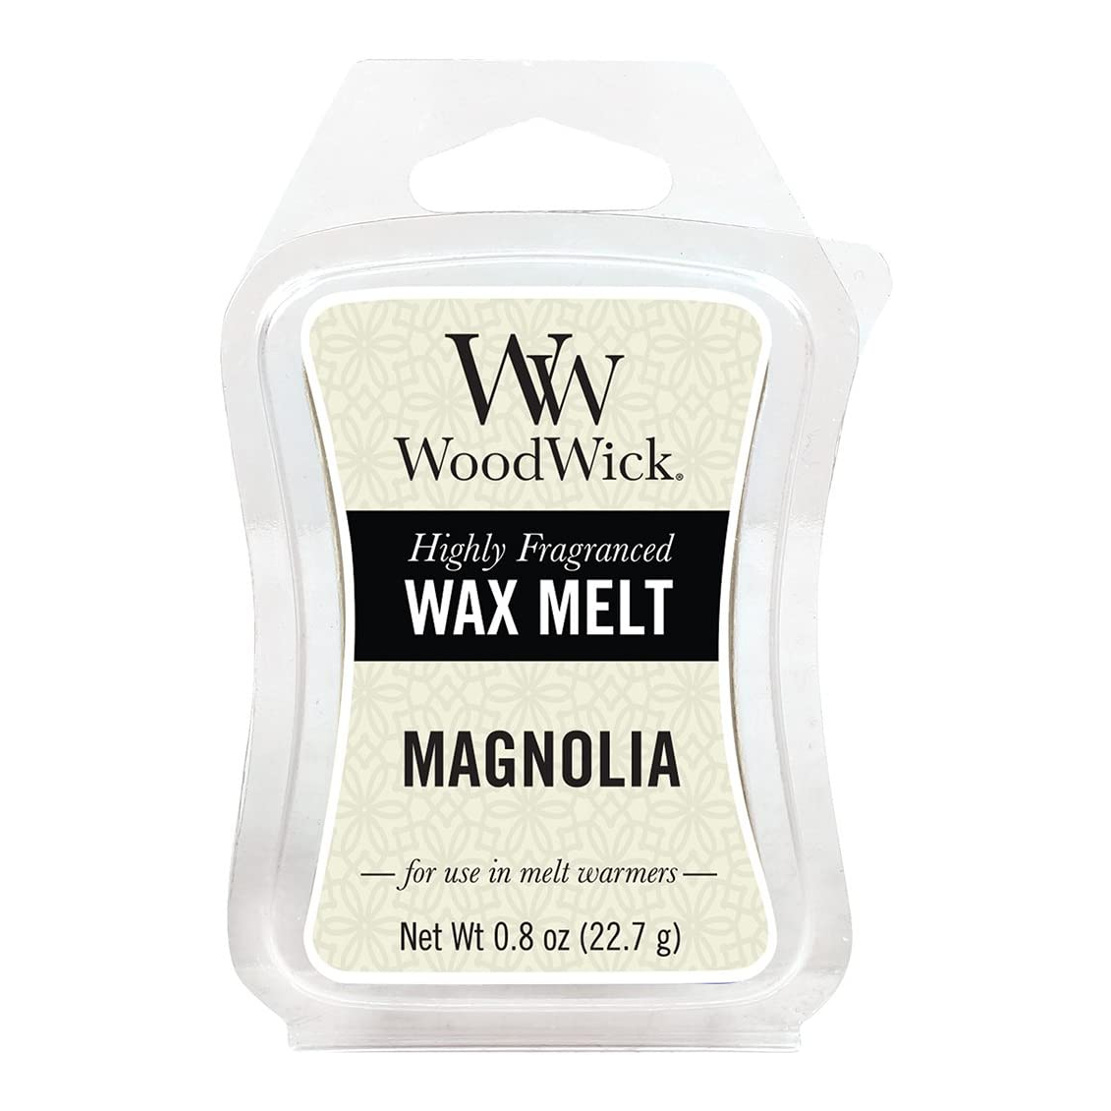 Woodwick Magnolia Wax Melt